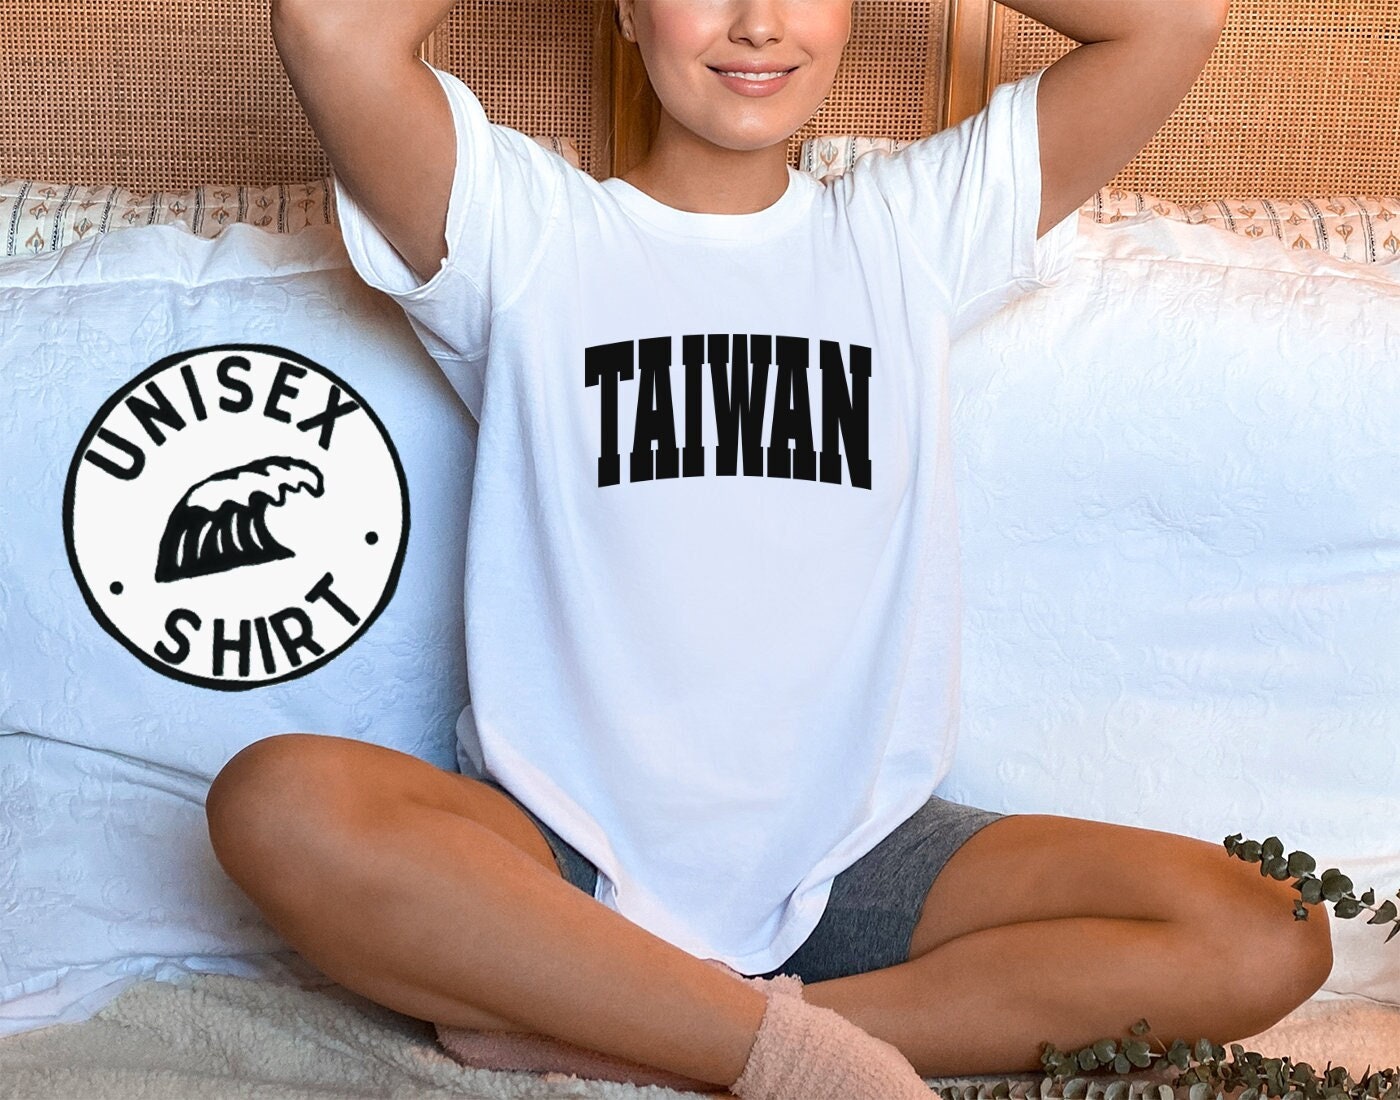 japanese yabai slang awesome urban japan gift idea Women's T-Shirt